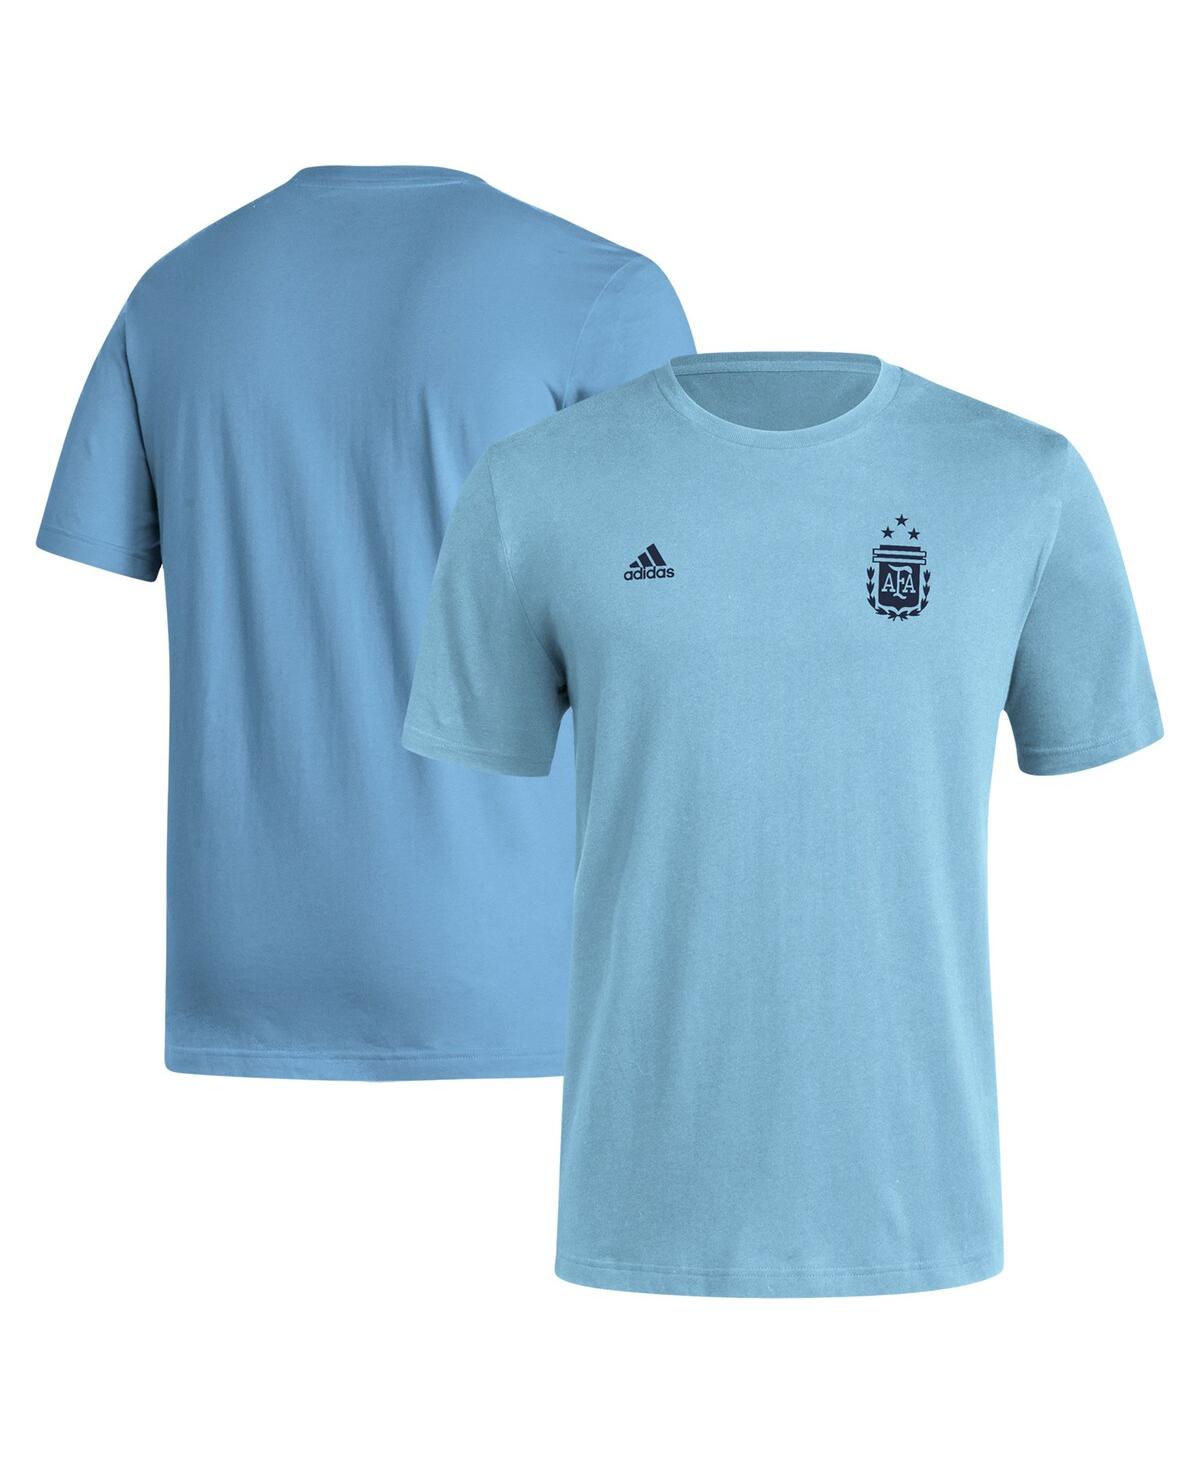 Shop Adidas Originals Men's Adidas Light Blue Argentina National Team Crest T-shirt